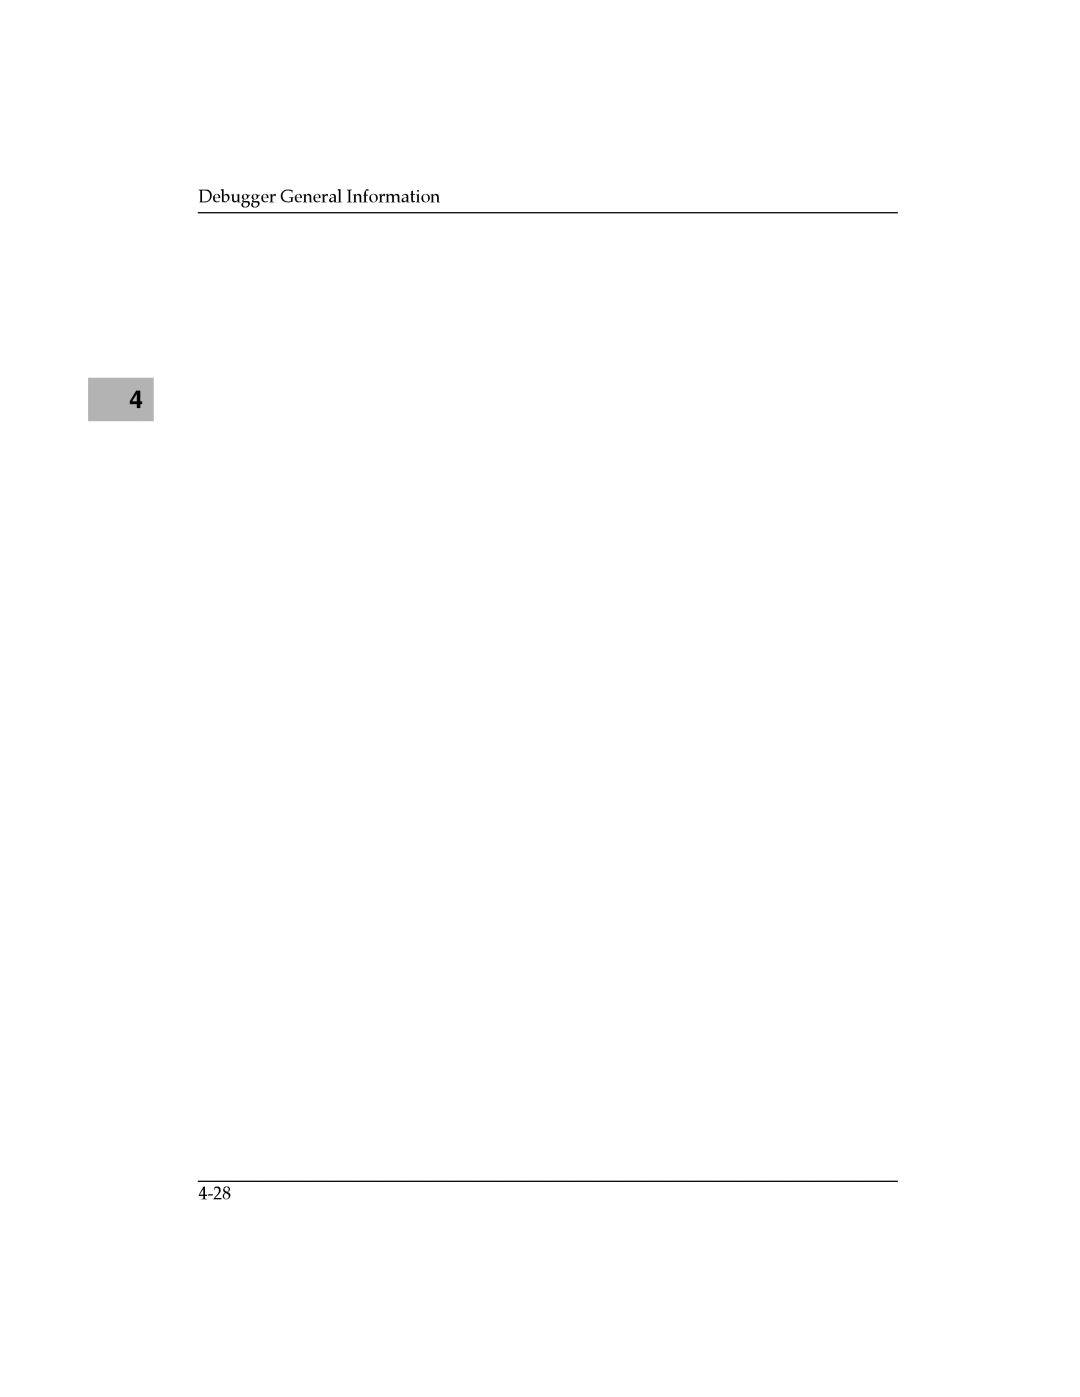 Motorola MVME187 manual Debugger General Information, 4-28 